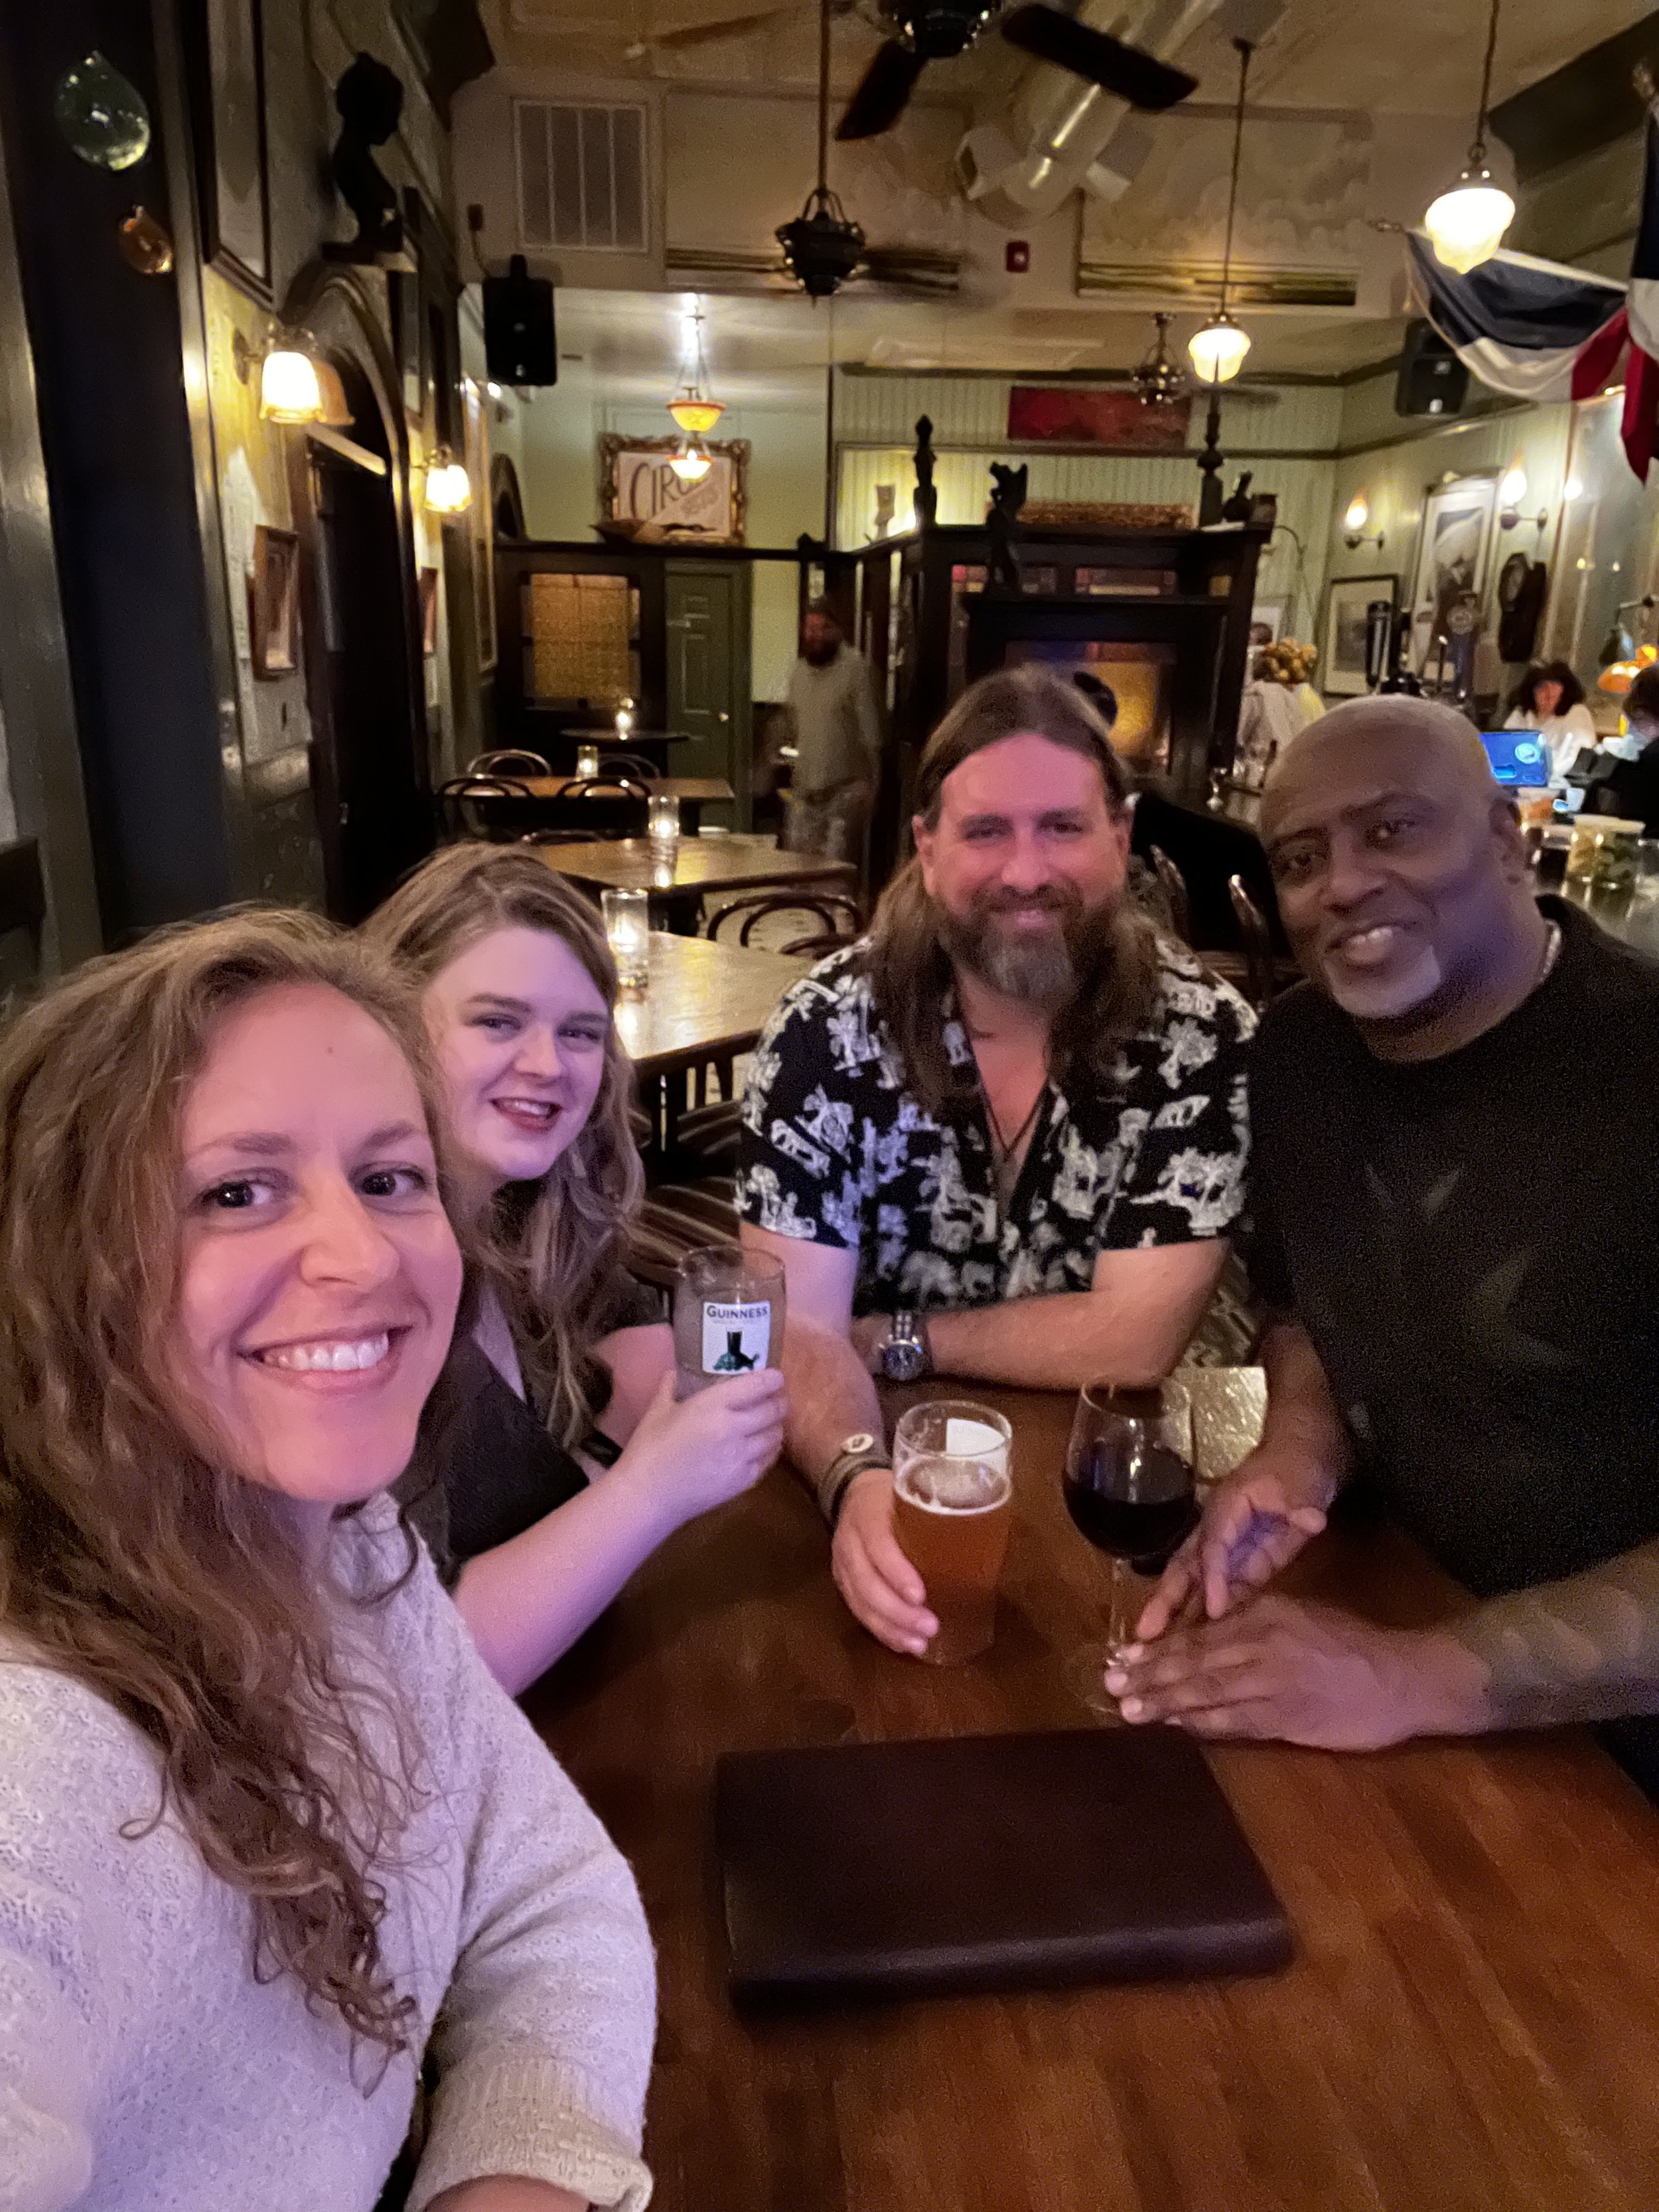 Enjoying a drink with friends in Savannah